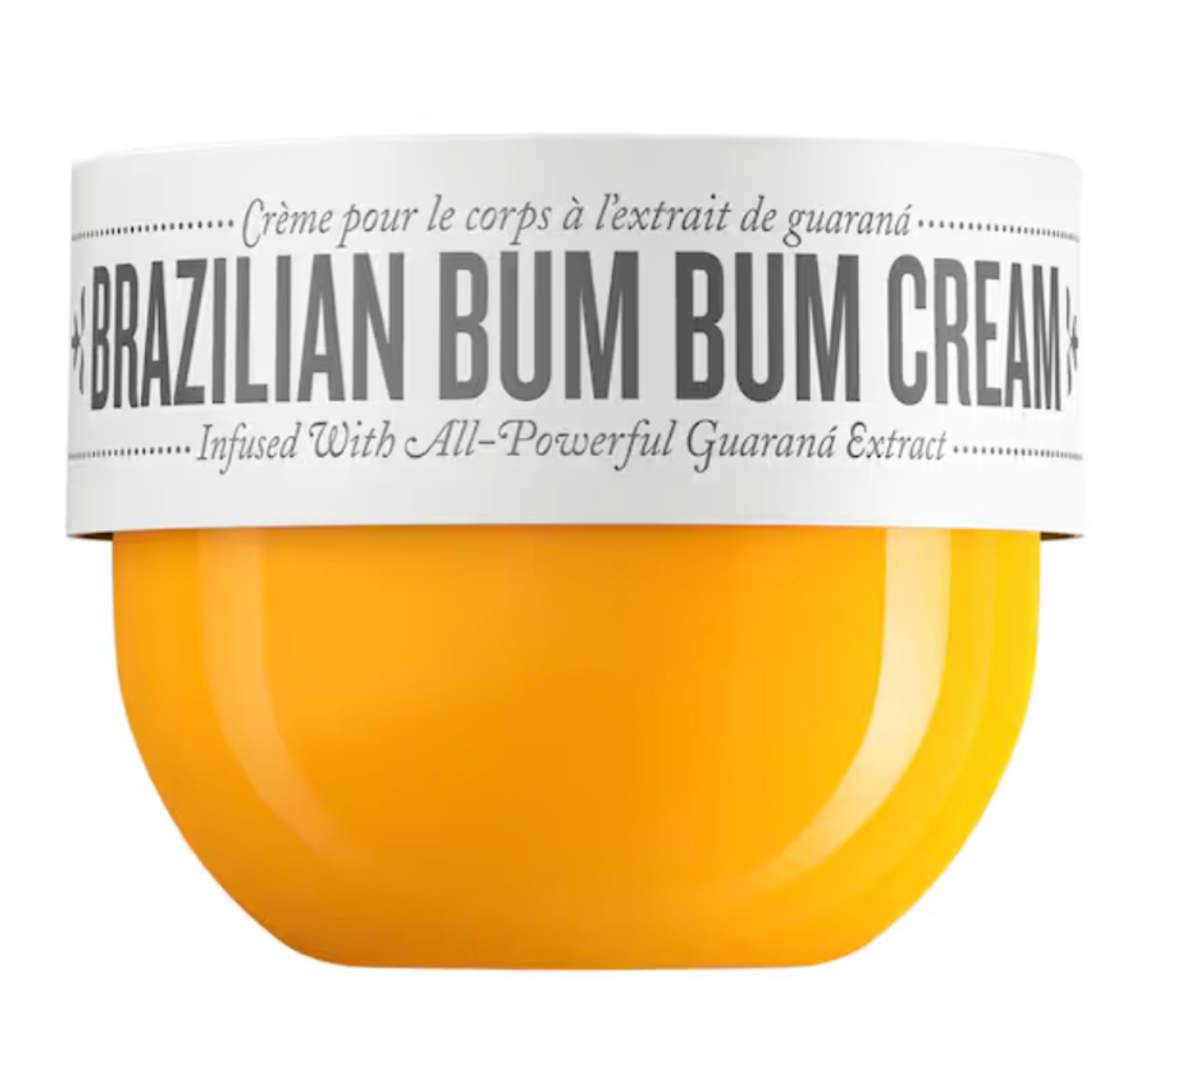 Crema corporal Brazilian Bum Bum Cream